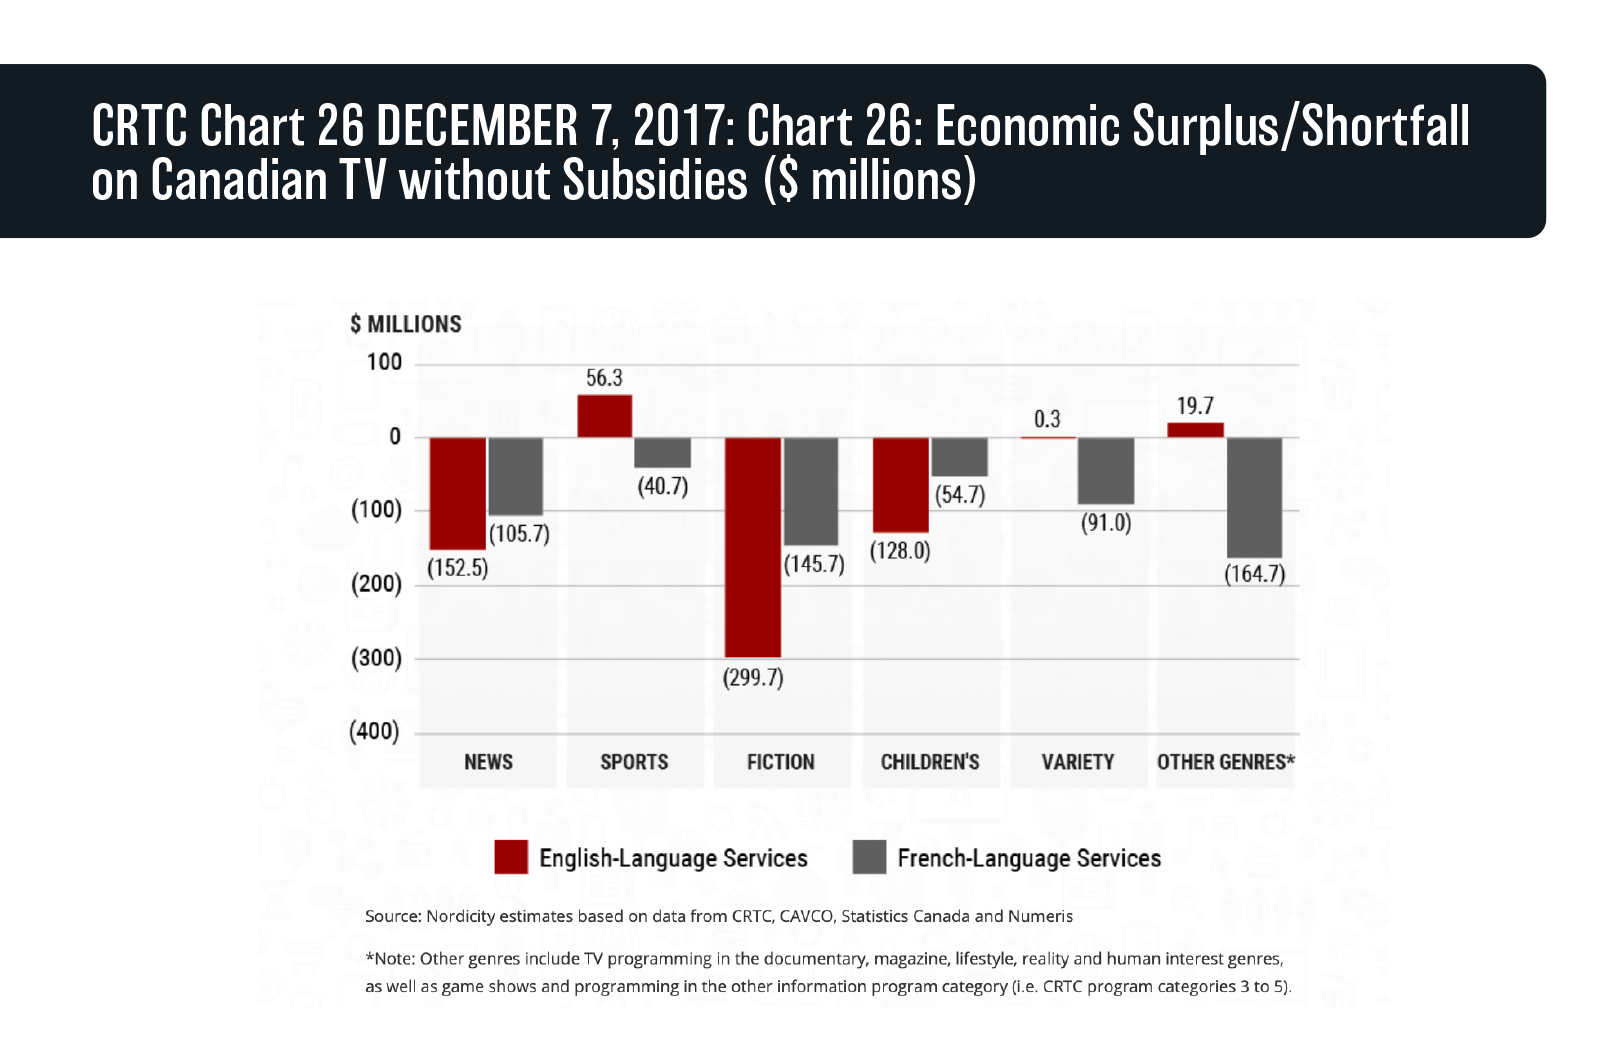 Figure 6.1: CRTC Chart 26 DECEMBER 7, 2017: Chart 26: Economic Surplus/Shortfall on Canadian TV without Subsidies ($ millions)